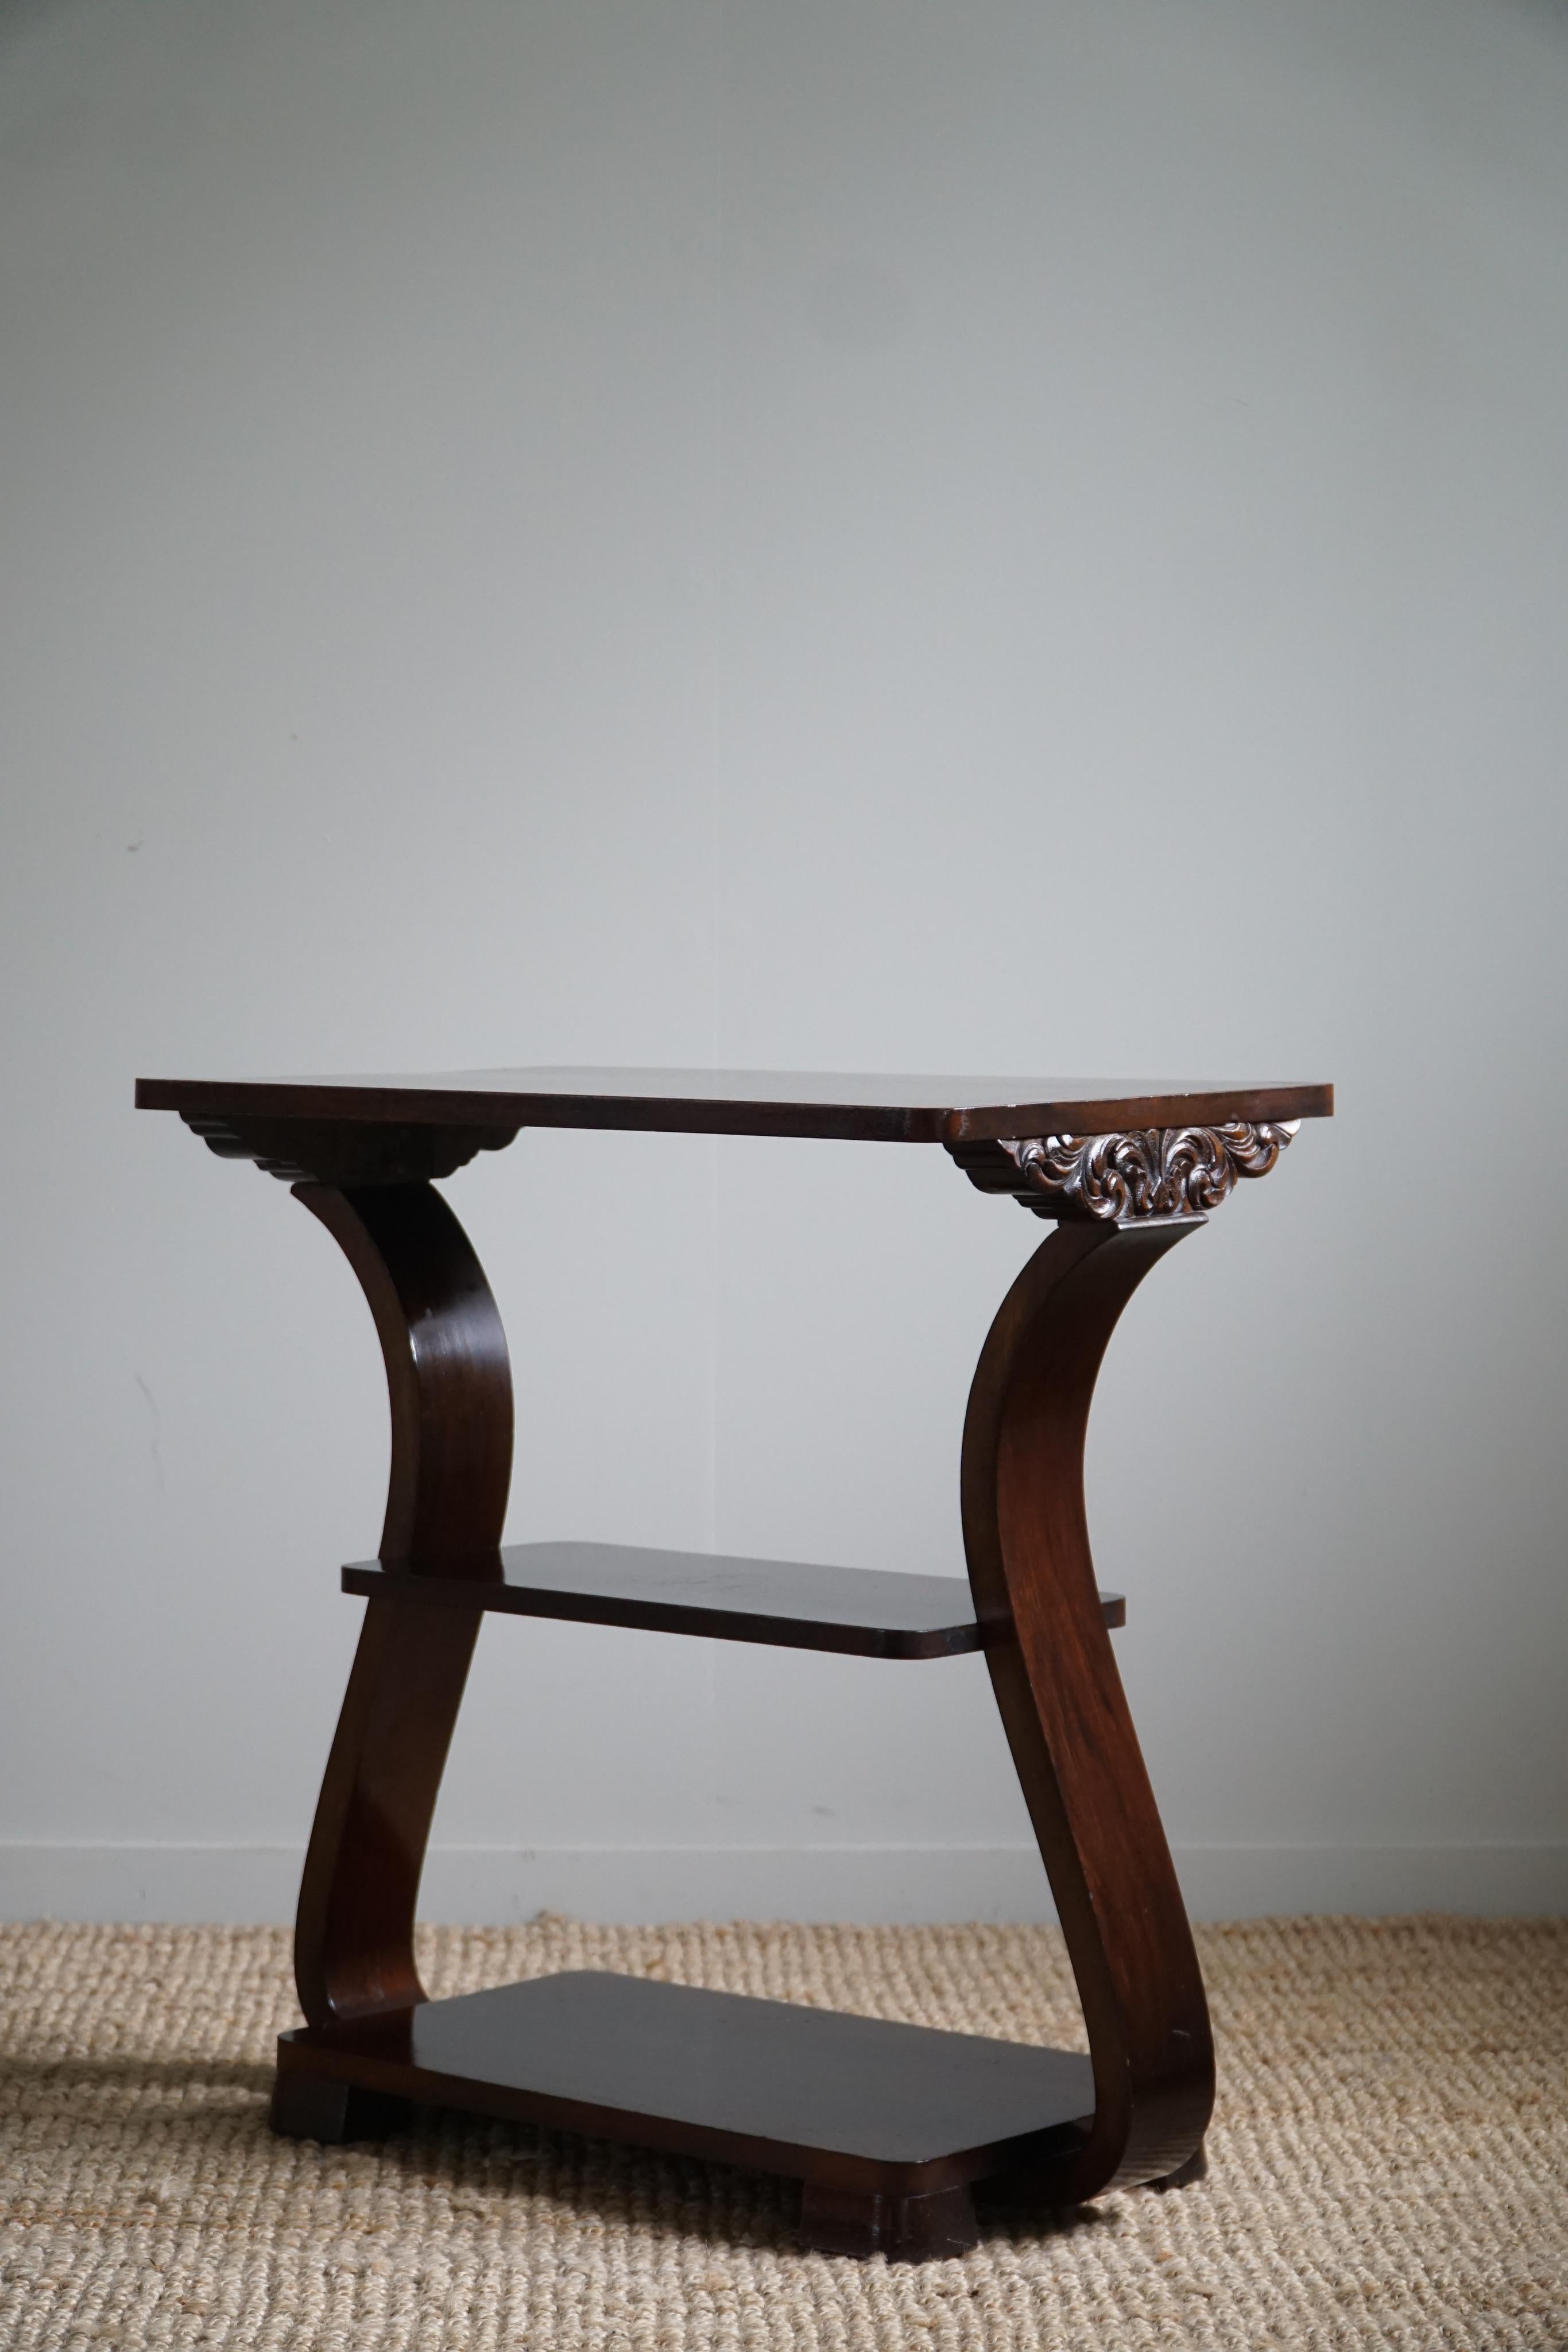 Swedish Danish Art Nouveau Side Table / Pedestal in Walnut, Early 20th Century For Sale